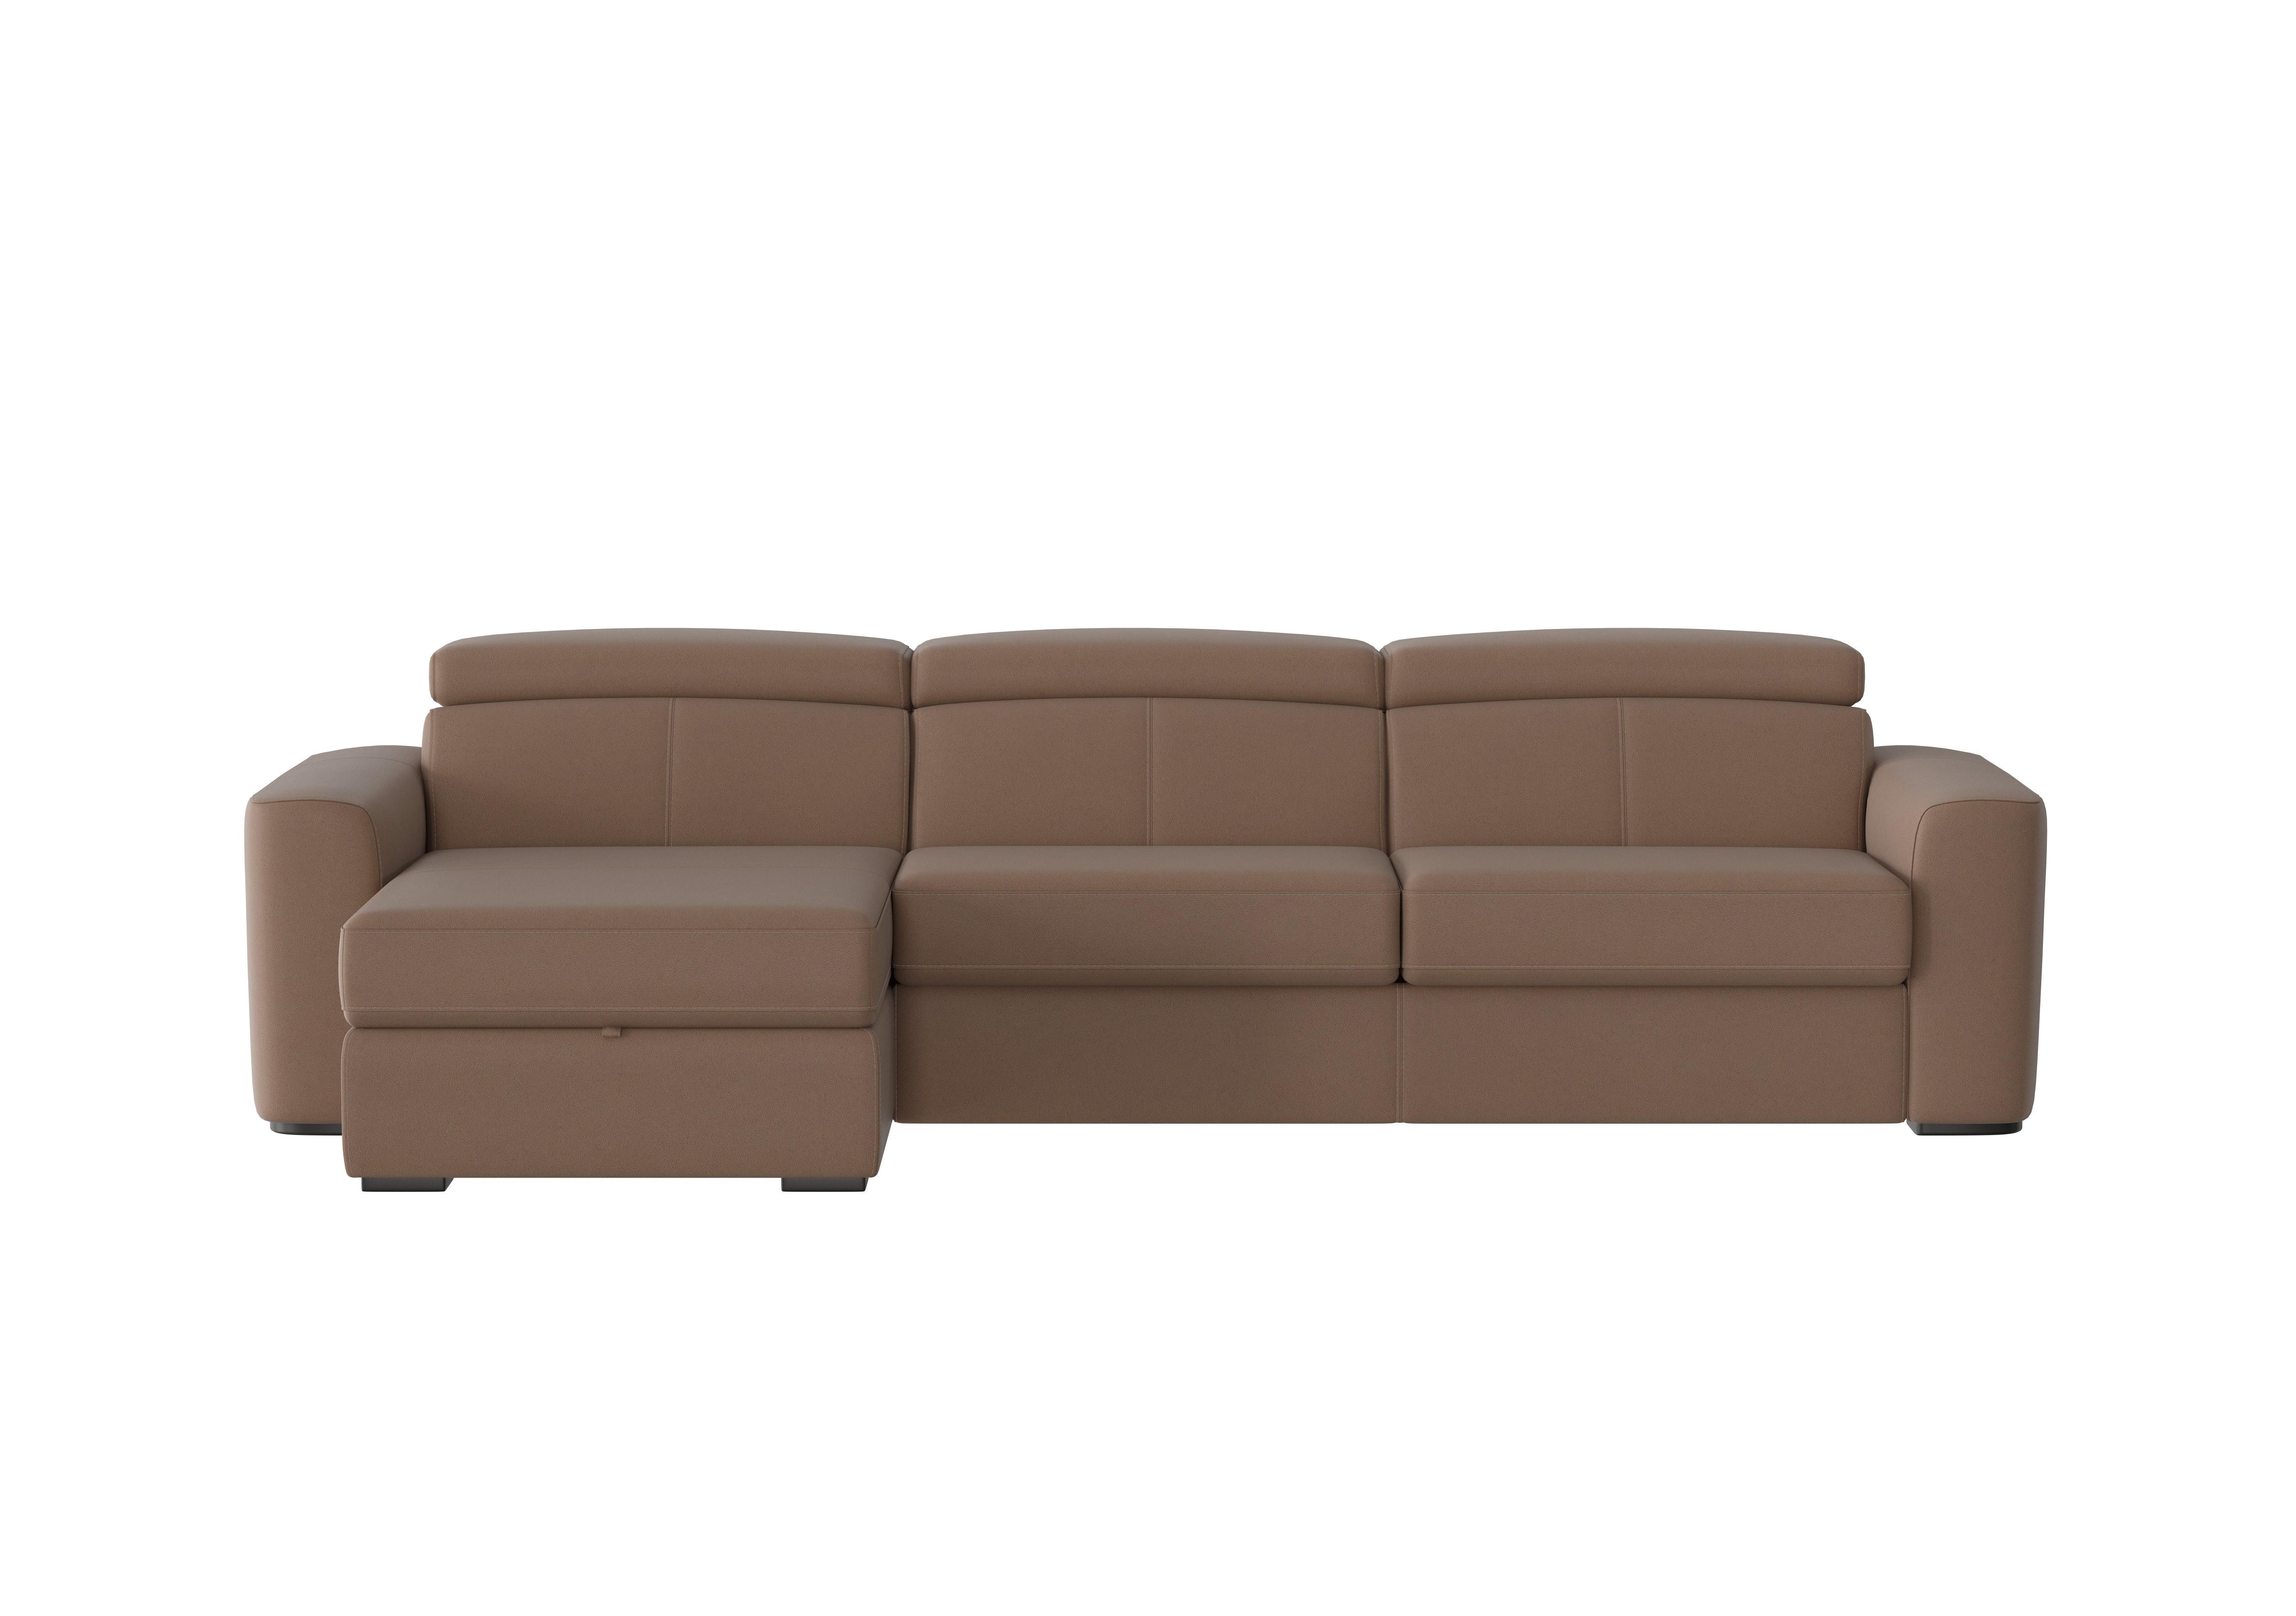 Infinity Fabric Corner Chaise Sofa with Storage in Bfa-Blj-R04 Tobacco on Furniture Village